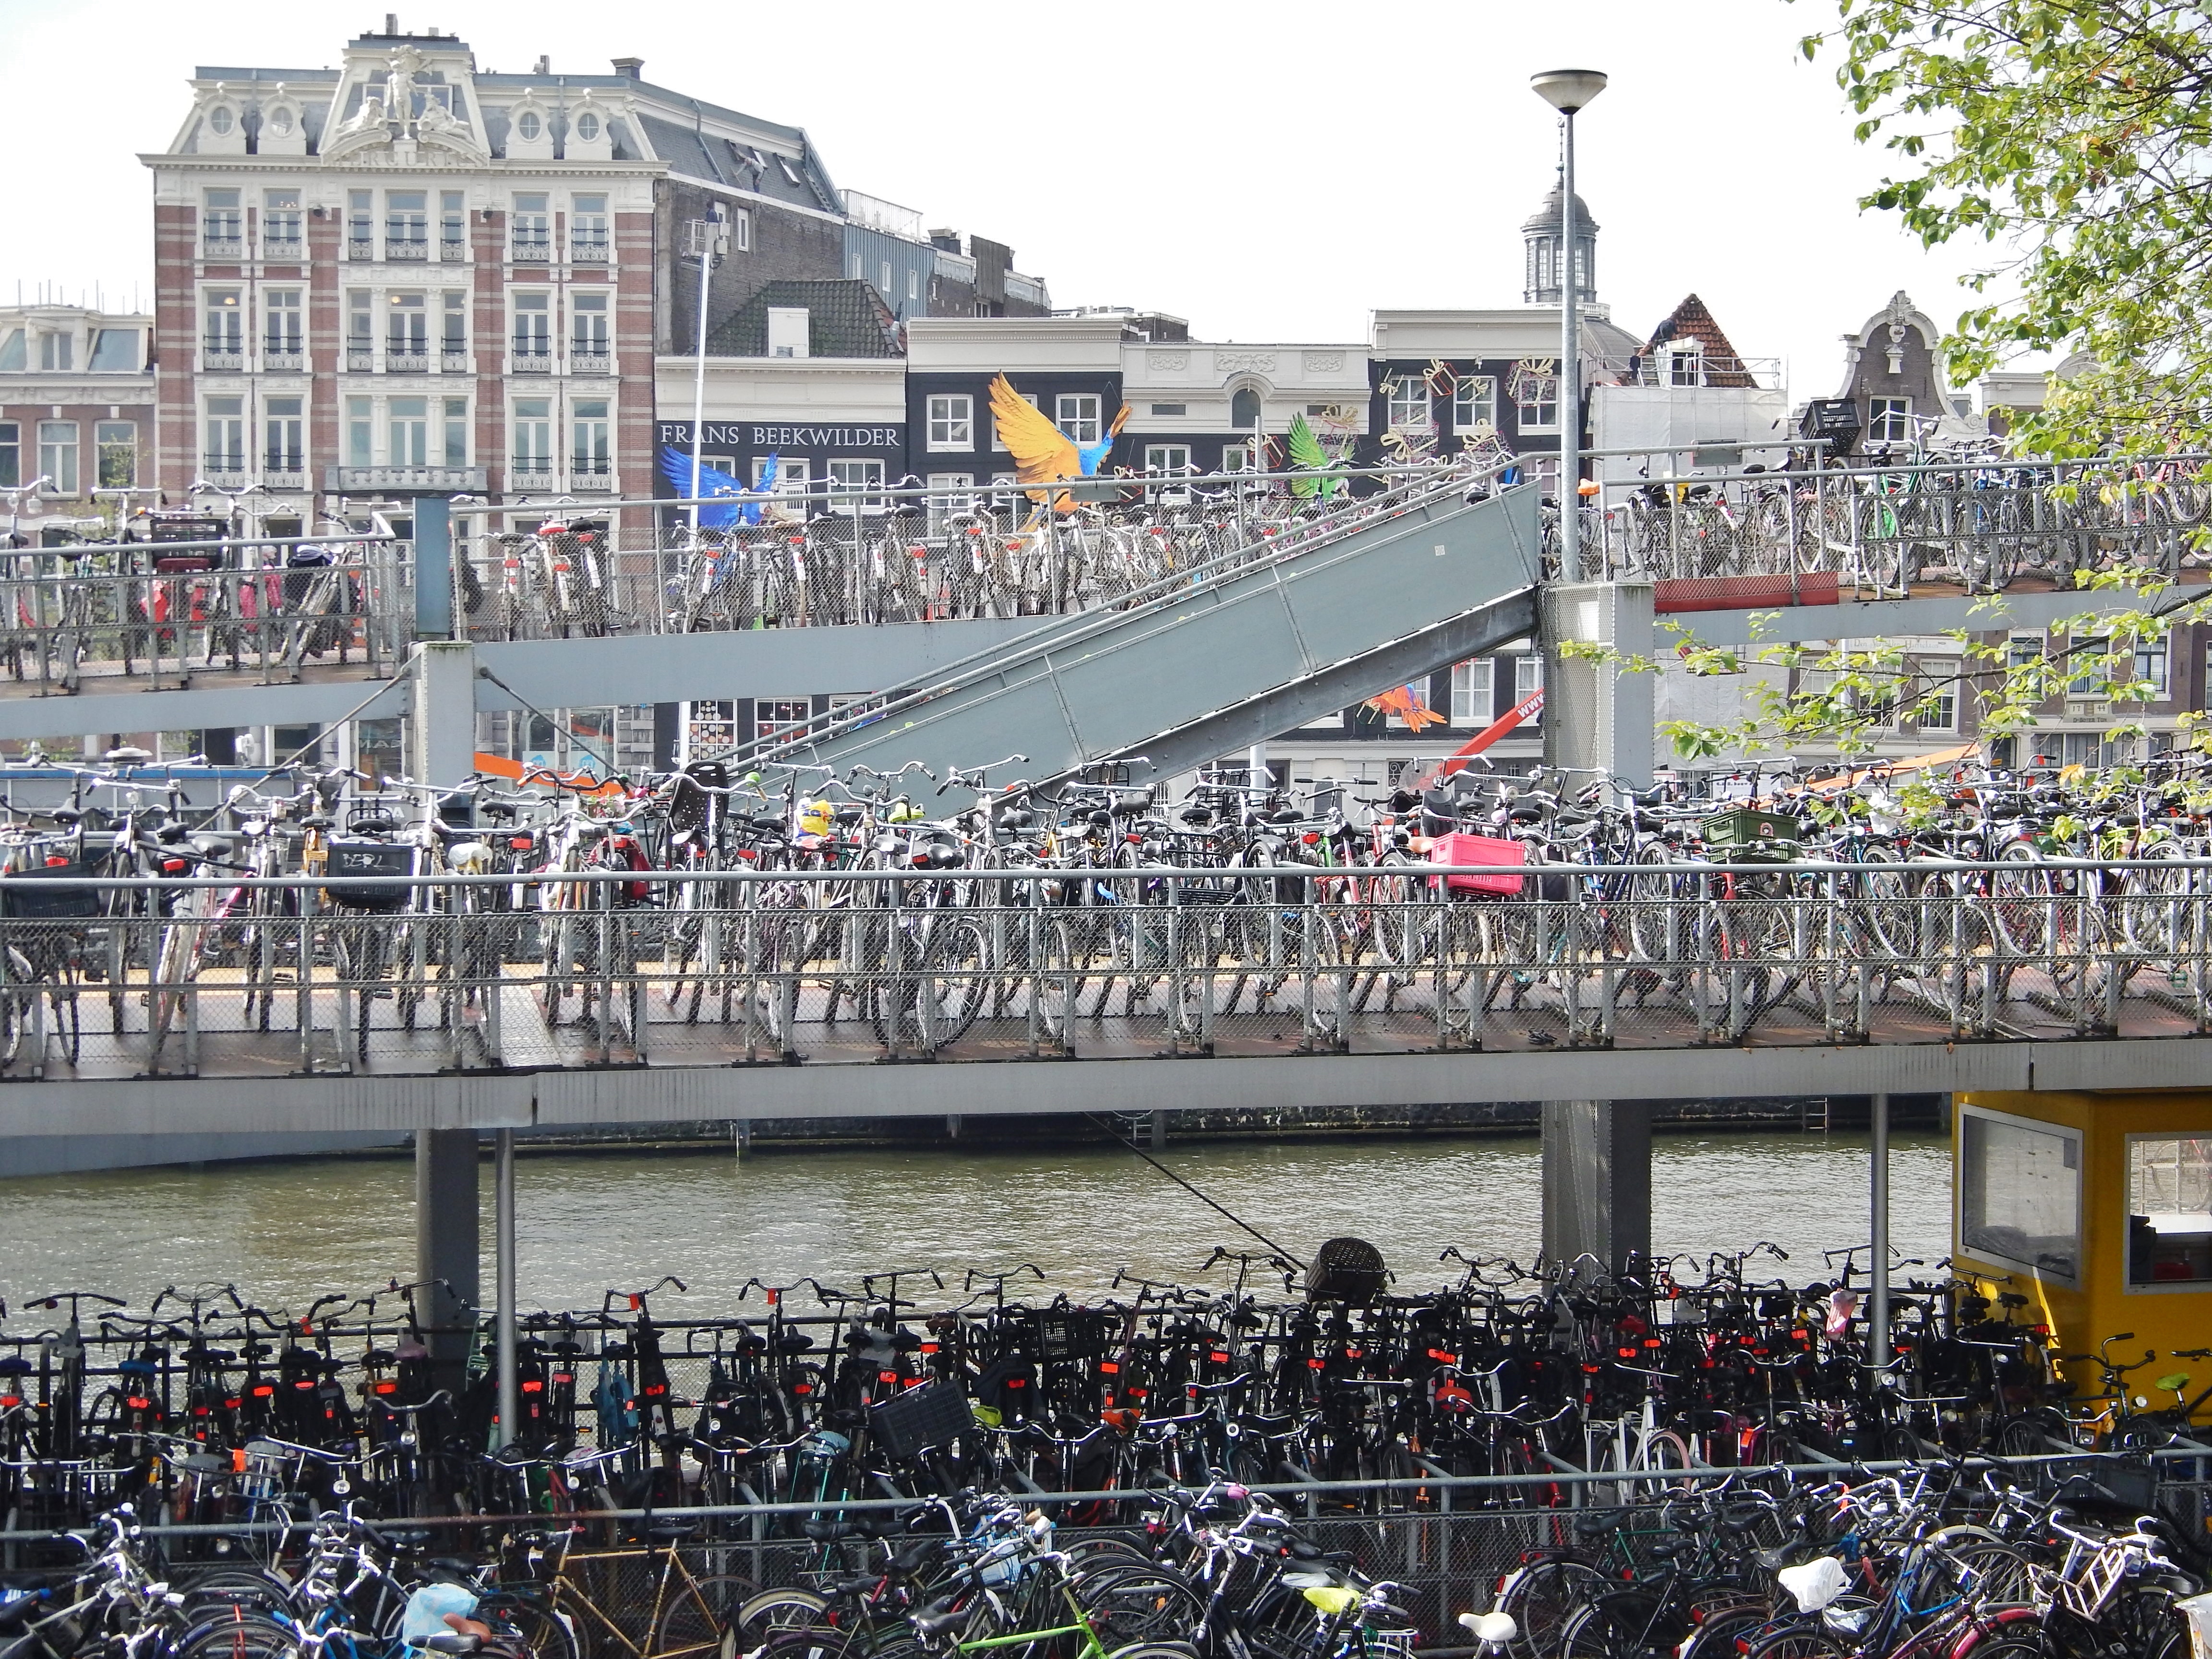 flexibel Onrustig Mens File:Fietsen station amsterdam, fiets parkeren in Amsterdam Railway Station  - panoramio.jpg - Wikimedia Commons